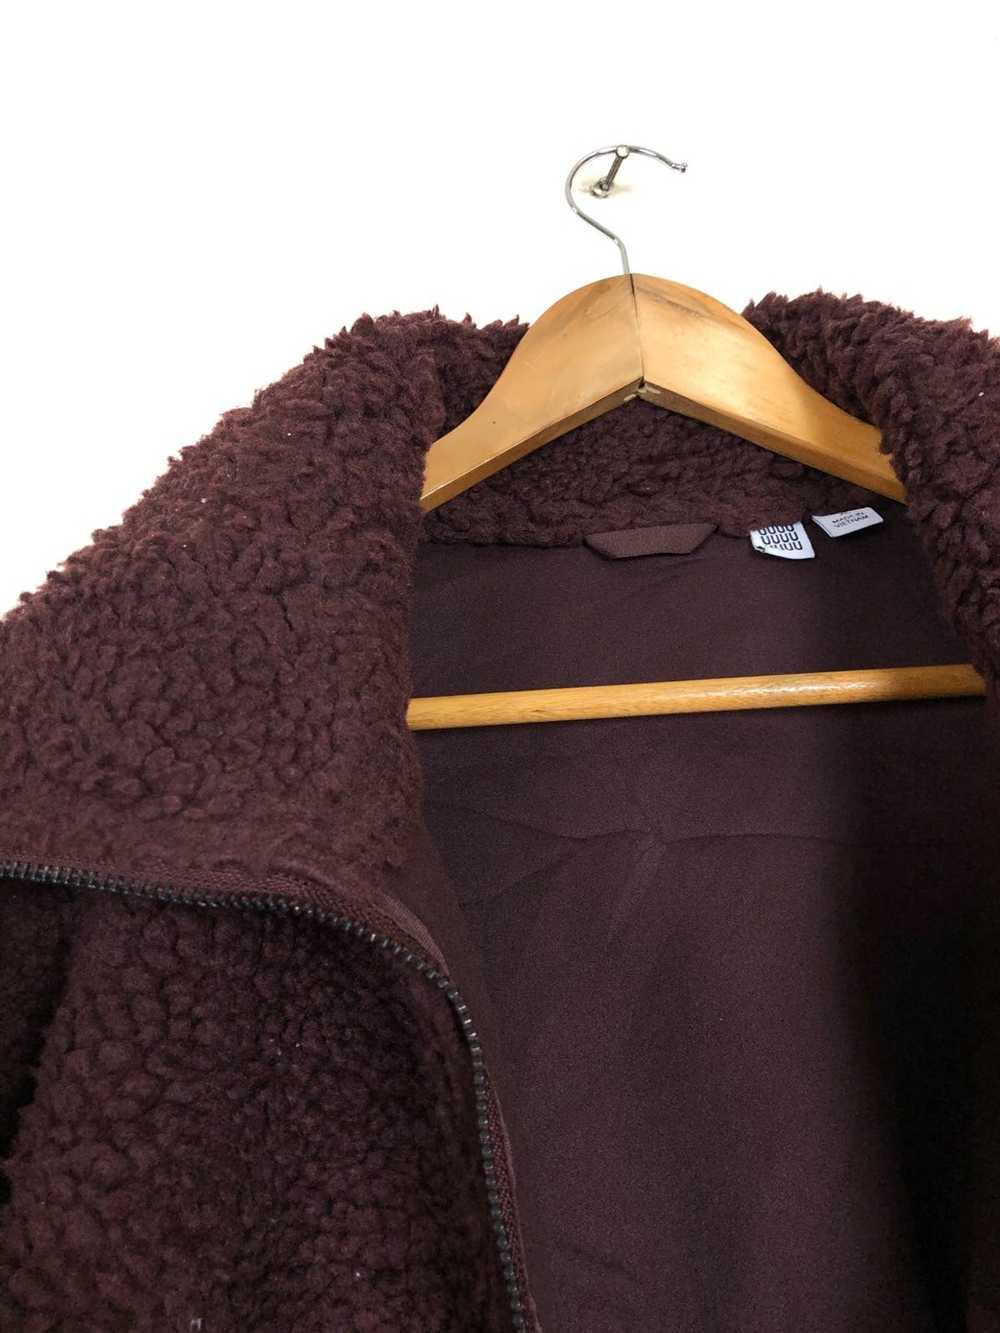 Vtgrare Bulky Fleece Uniqlo Sherpa Deep Pile Retro-x/size XL 